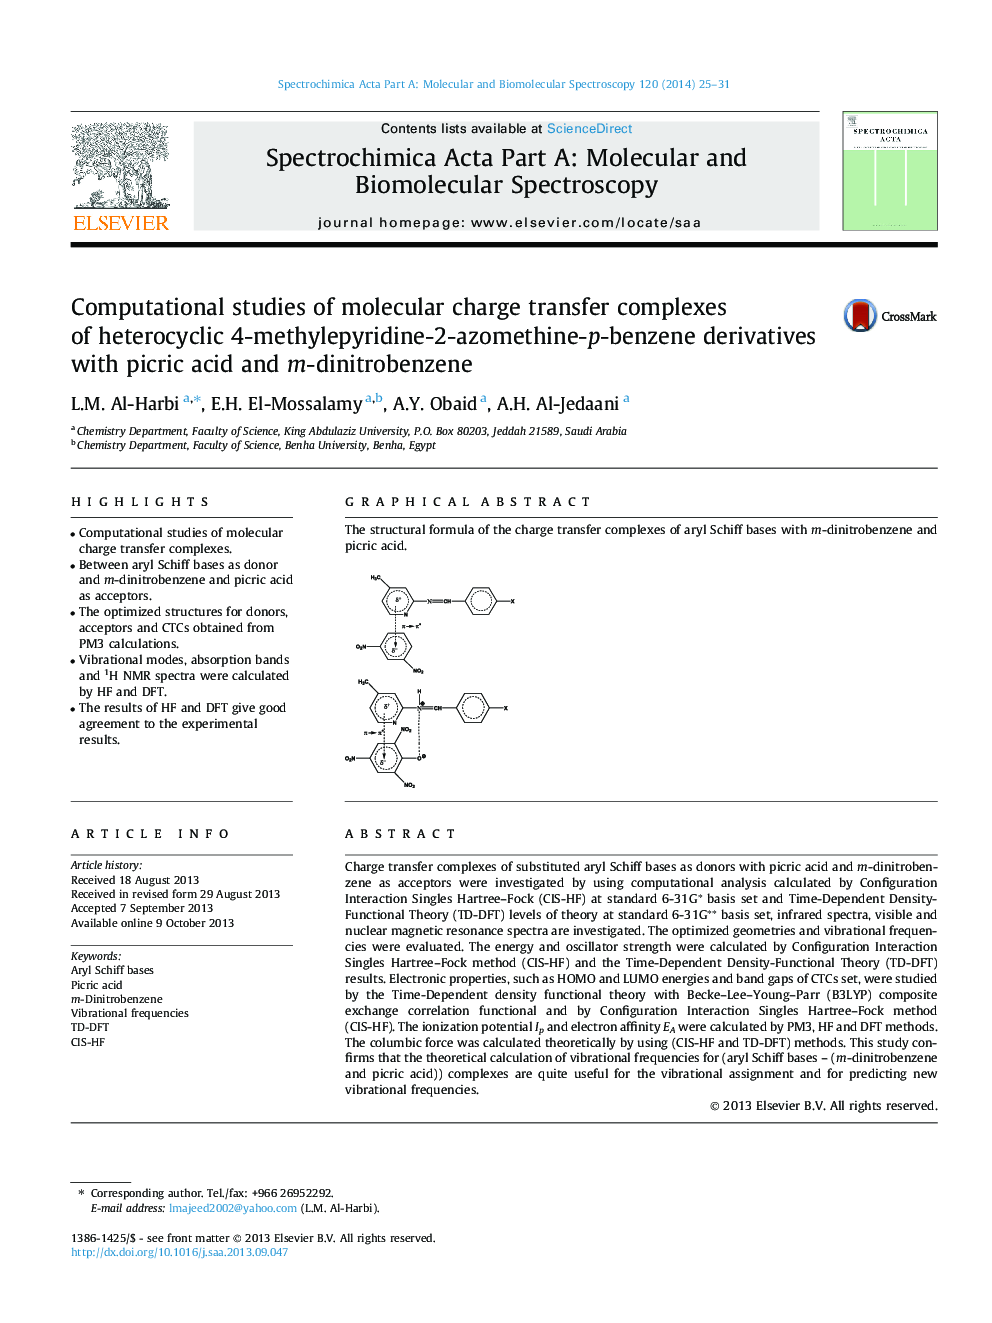 Computational studies of molecular charge transfer complexes of heterocyclic 4-methylepyridine-2-azomethine-p-benzene derivatives with picric acid and m-dinitrobenzene